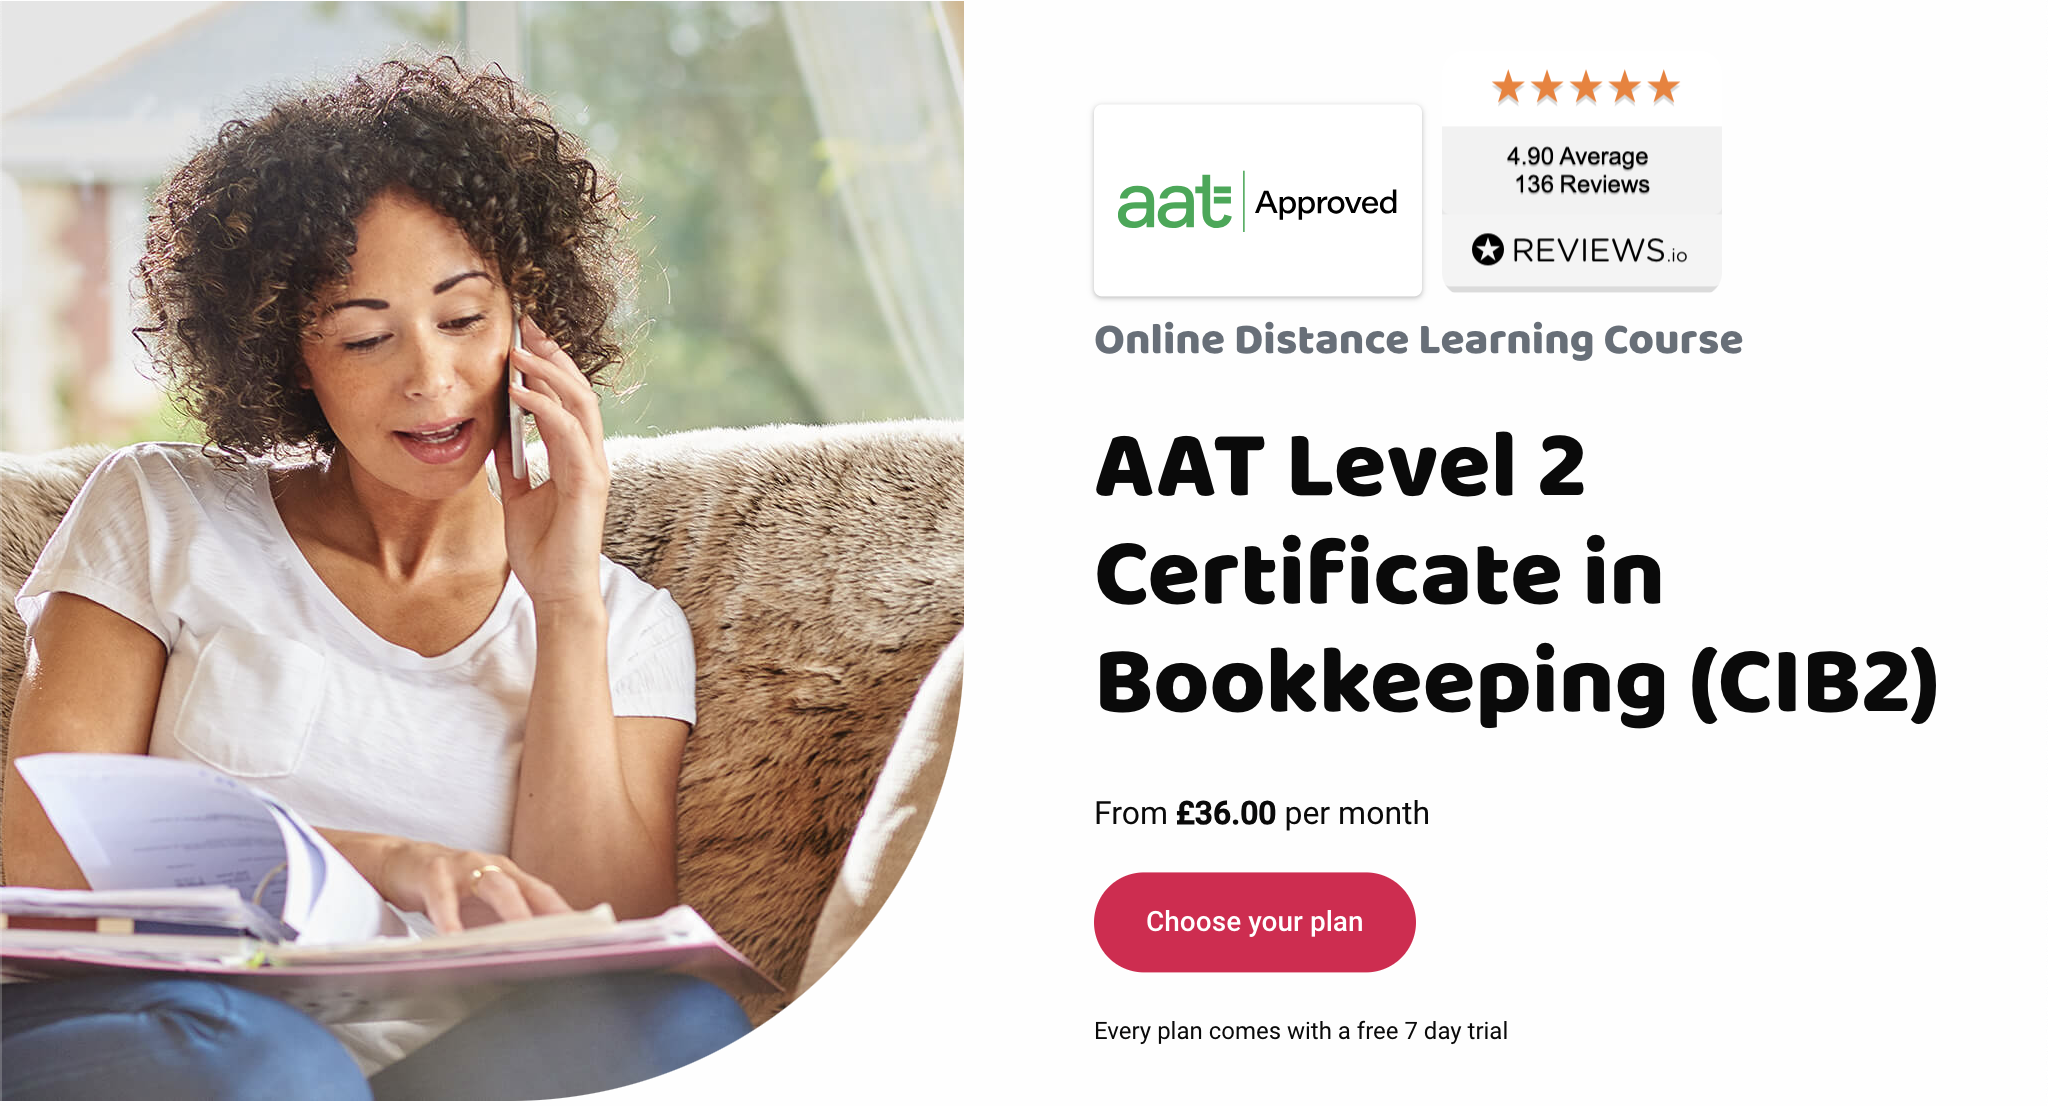 AAT Level 2 Certificate in Bookkeeping (CIB2)